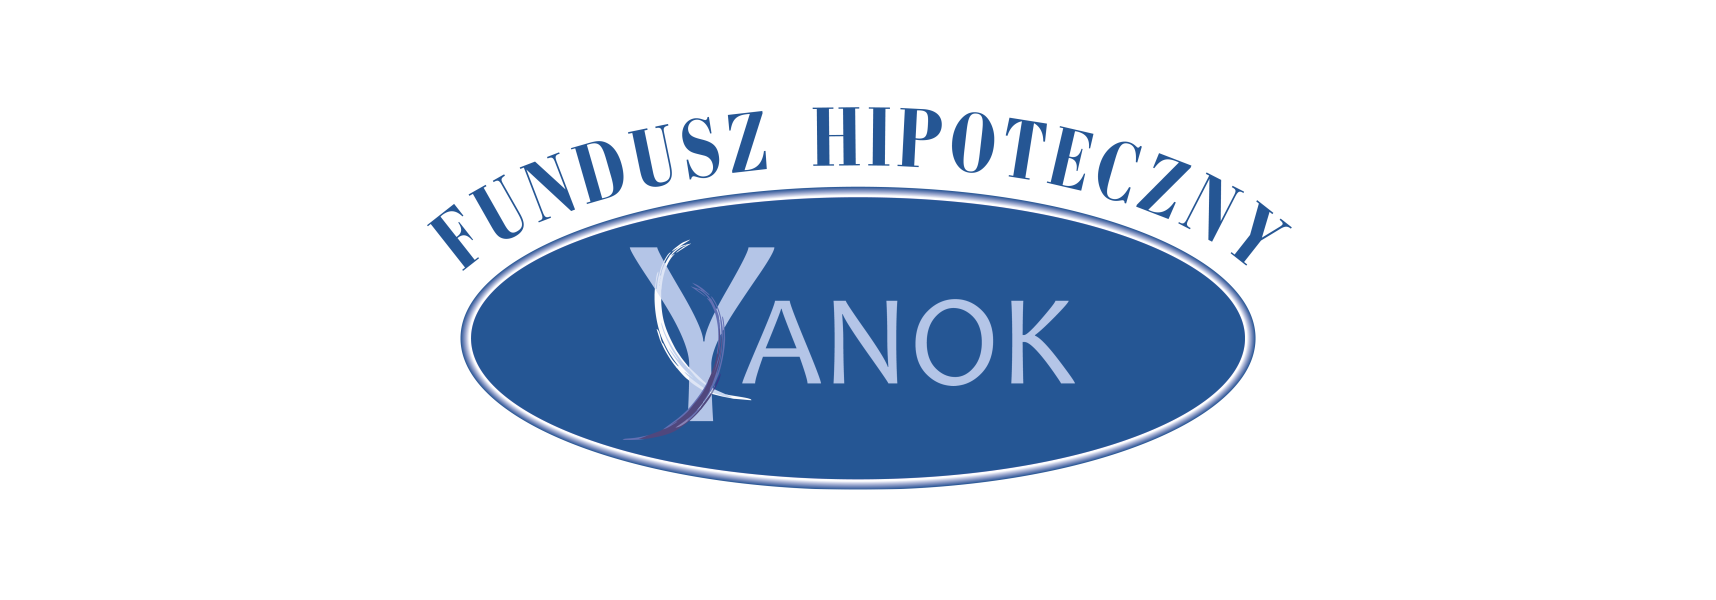 Yanok Hipoteczny